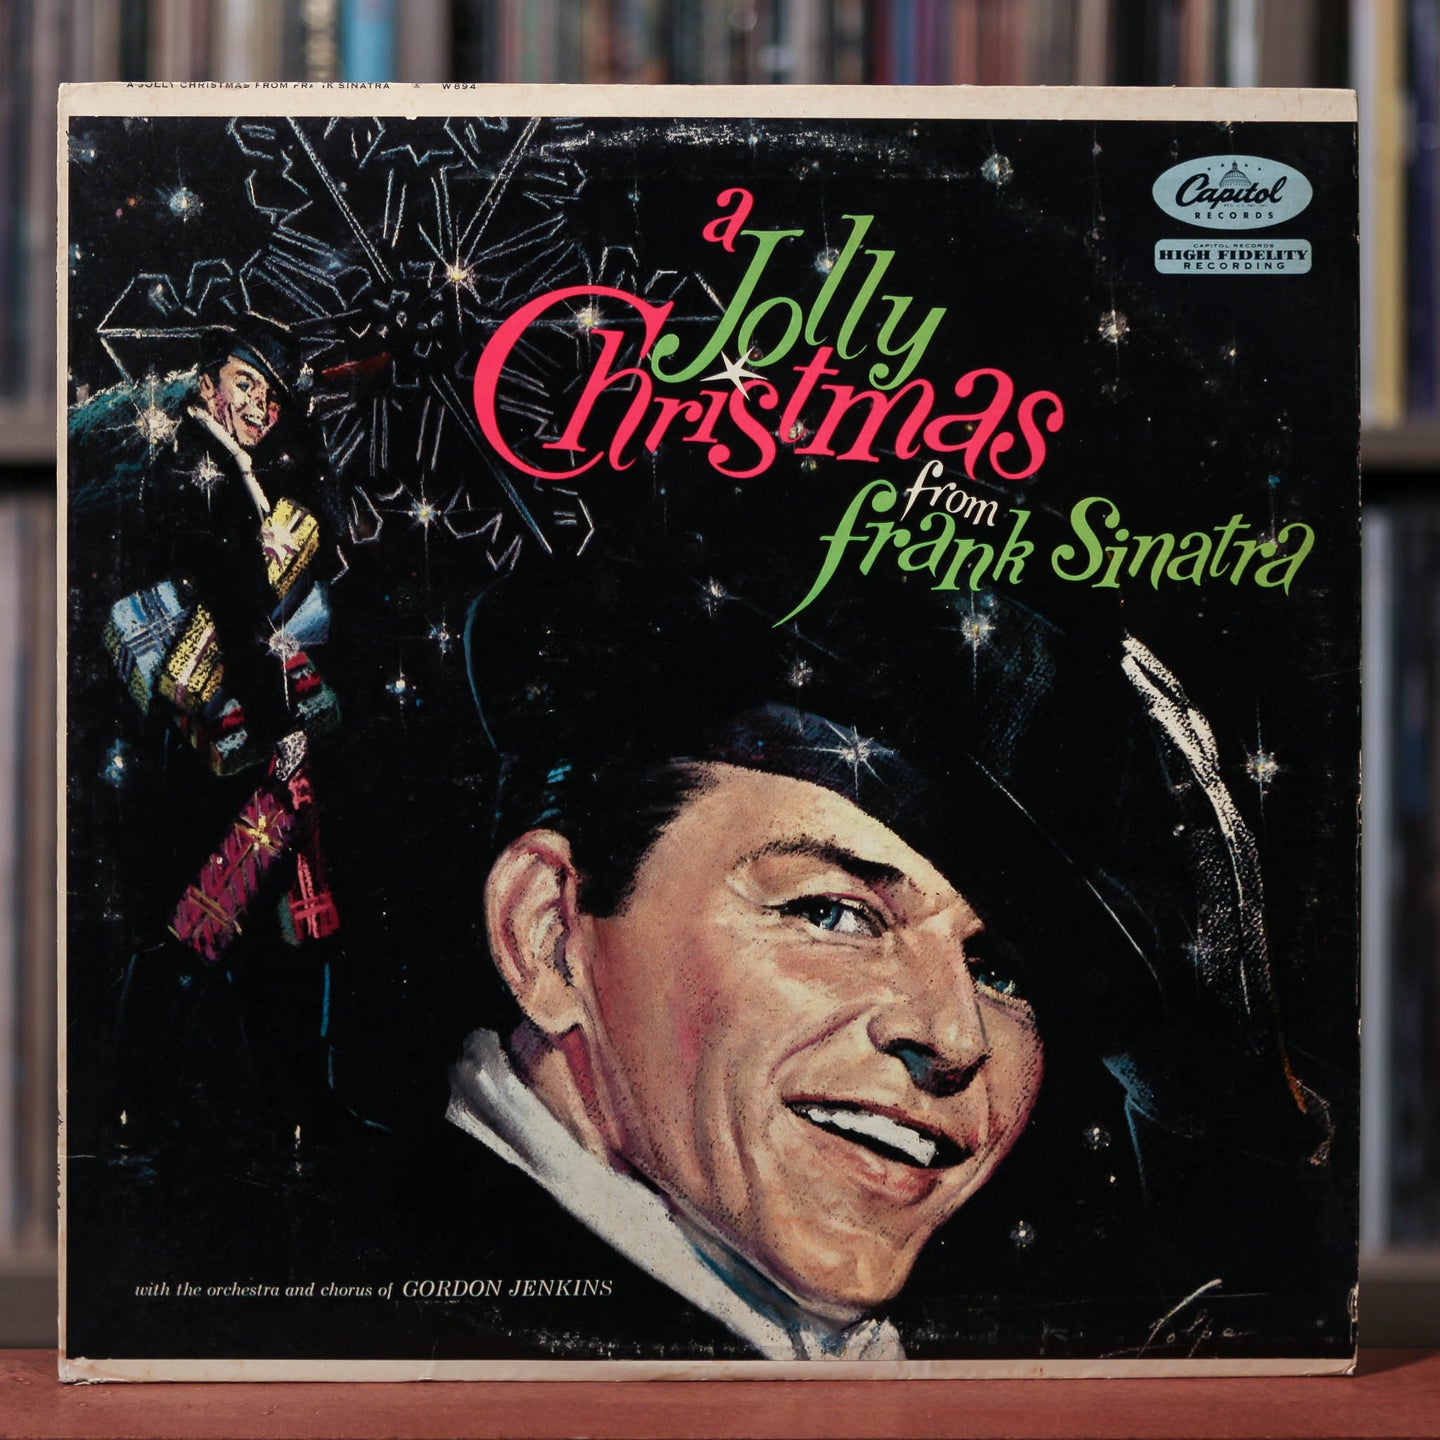 Frank Sinatra - A Jolly Christmas From Frank Sinatra - 1957 Capitol, VG/VG+